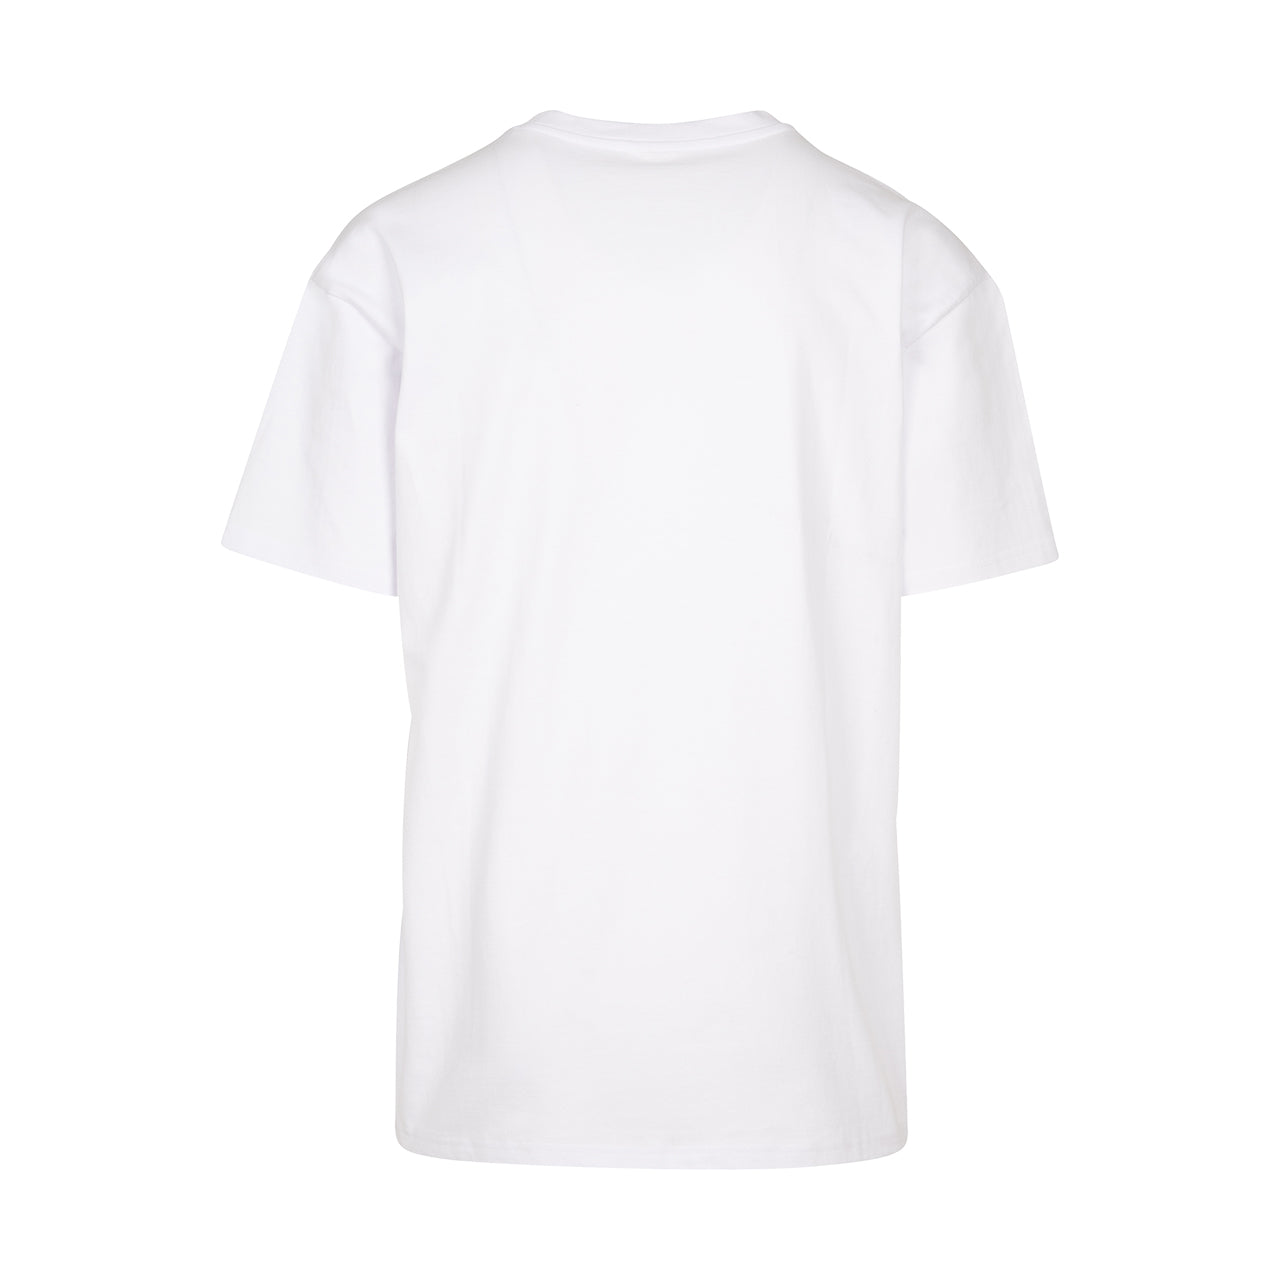 Felix Kröcher - Basic Shirt